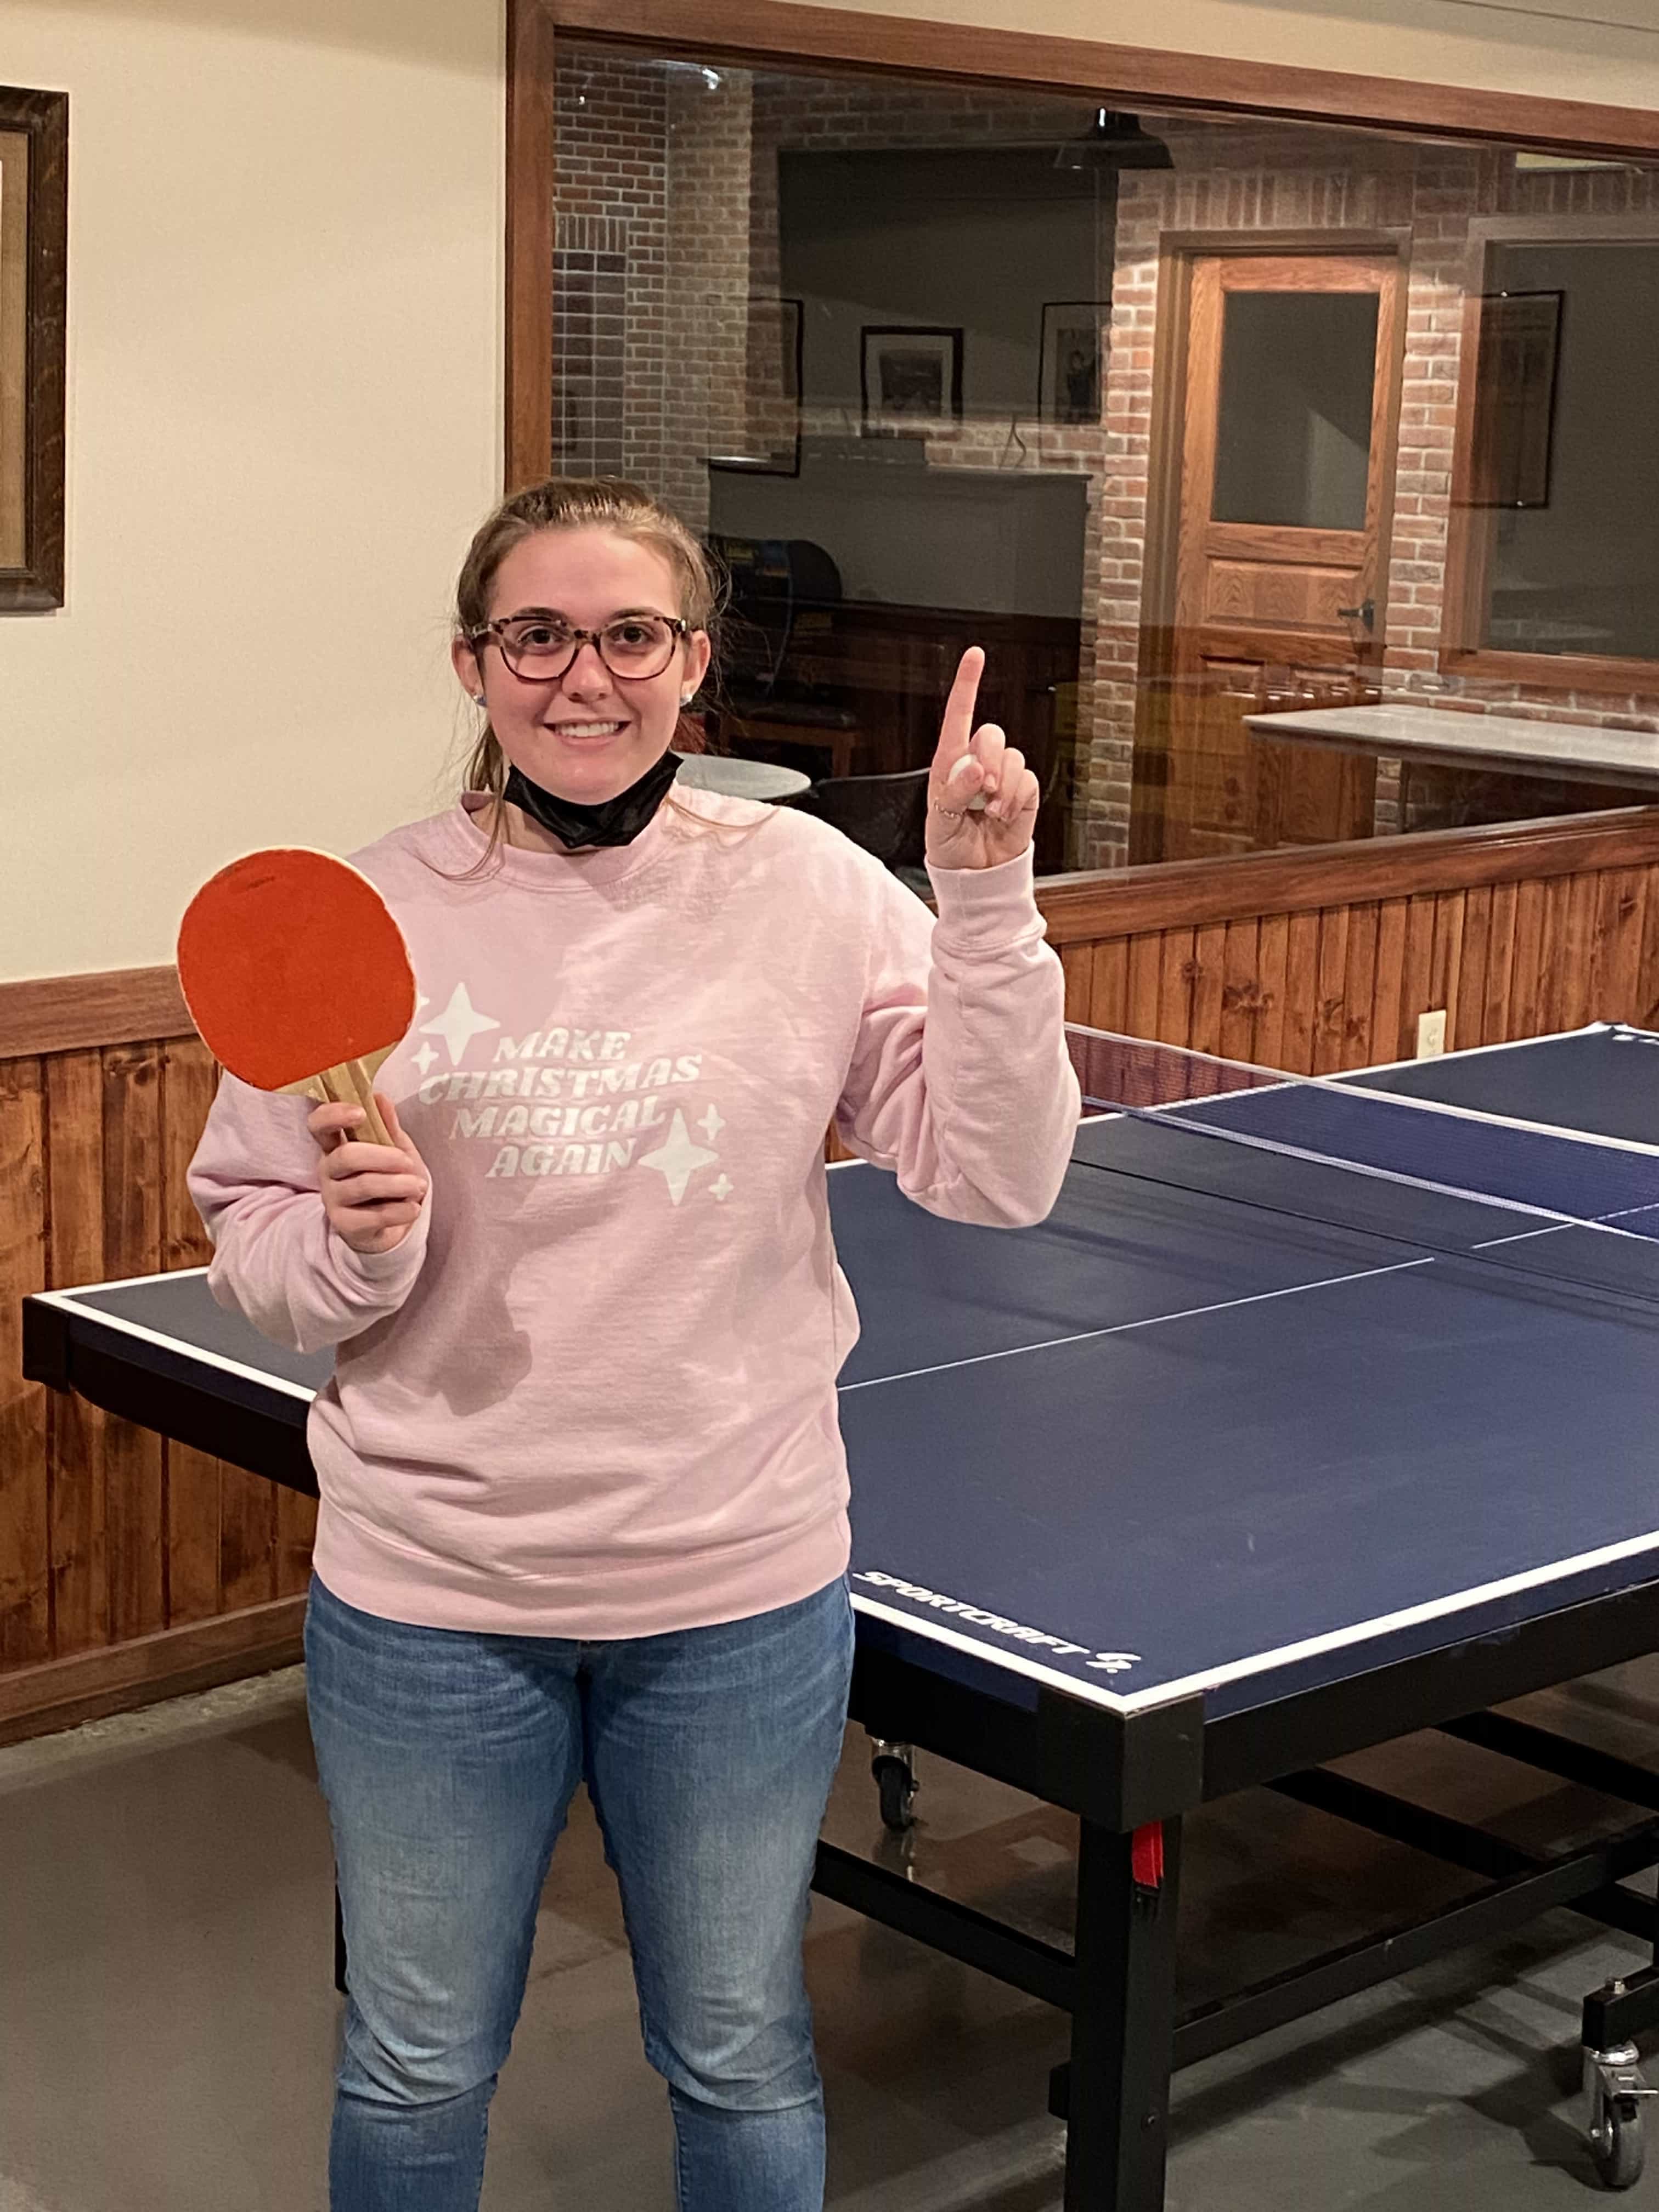 Maddie ping-pong champion